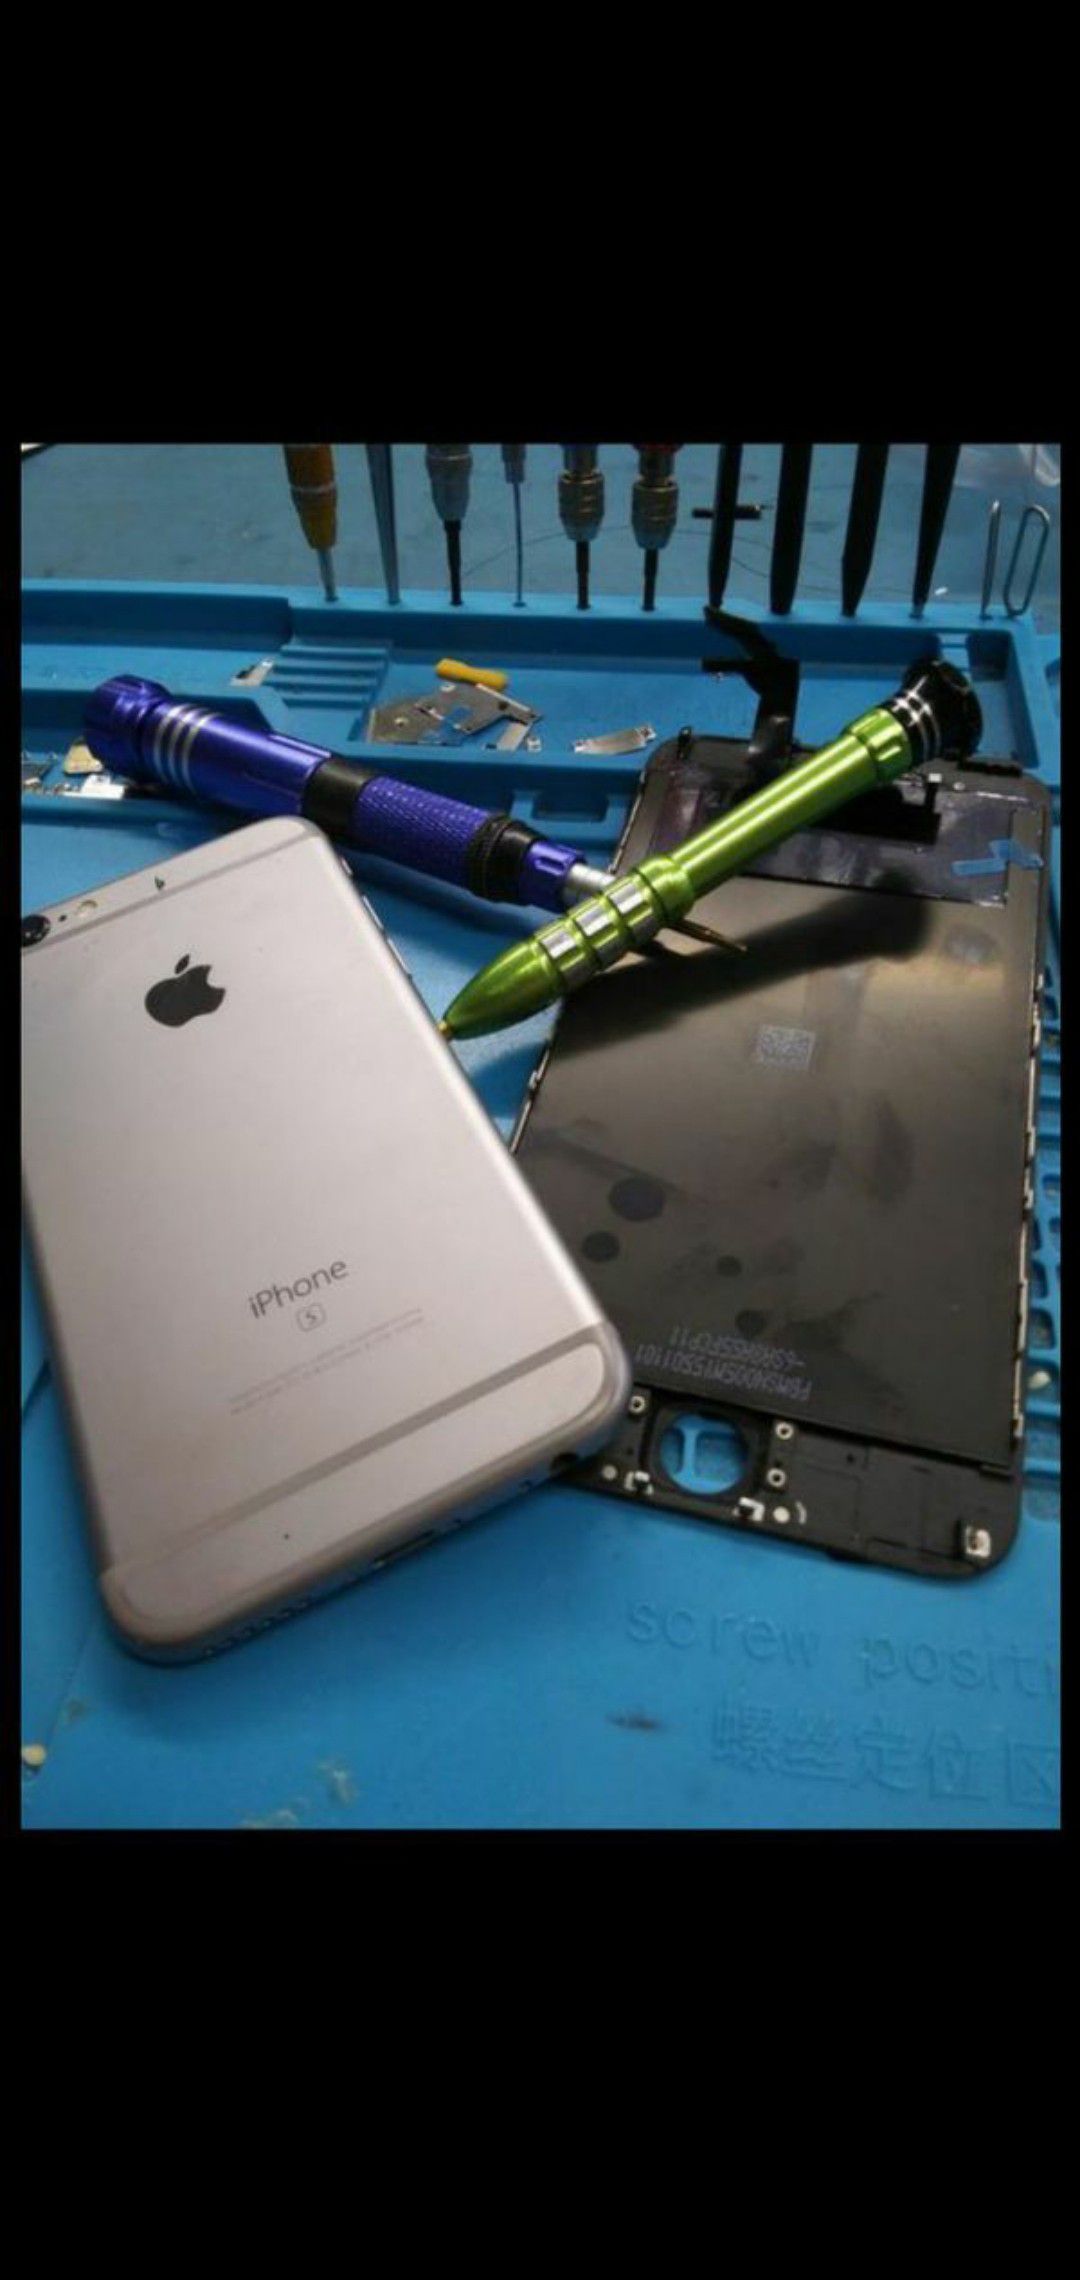 Iphone and iPad